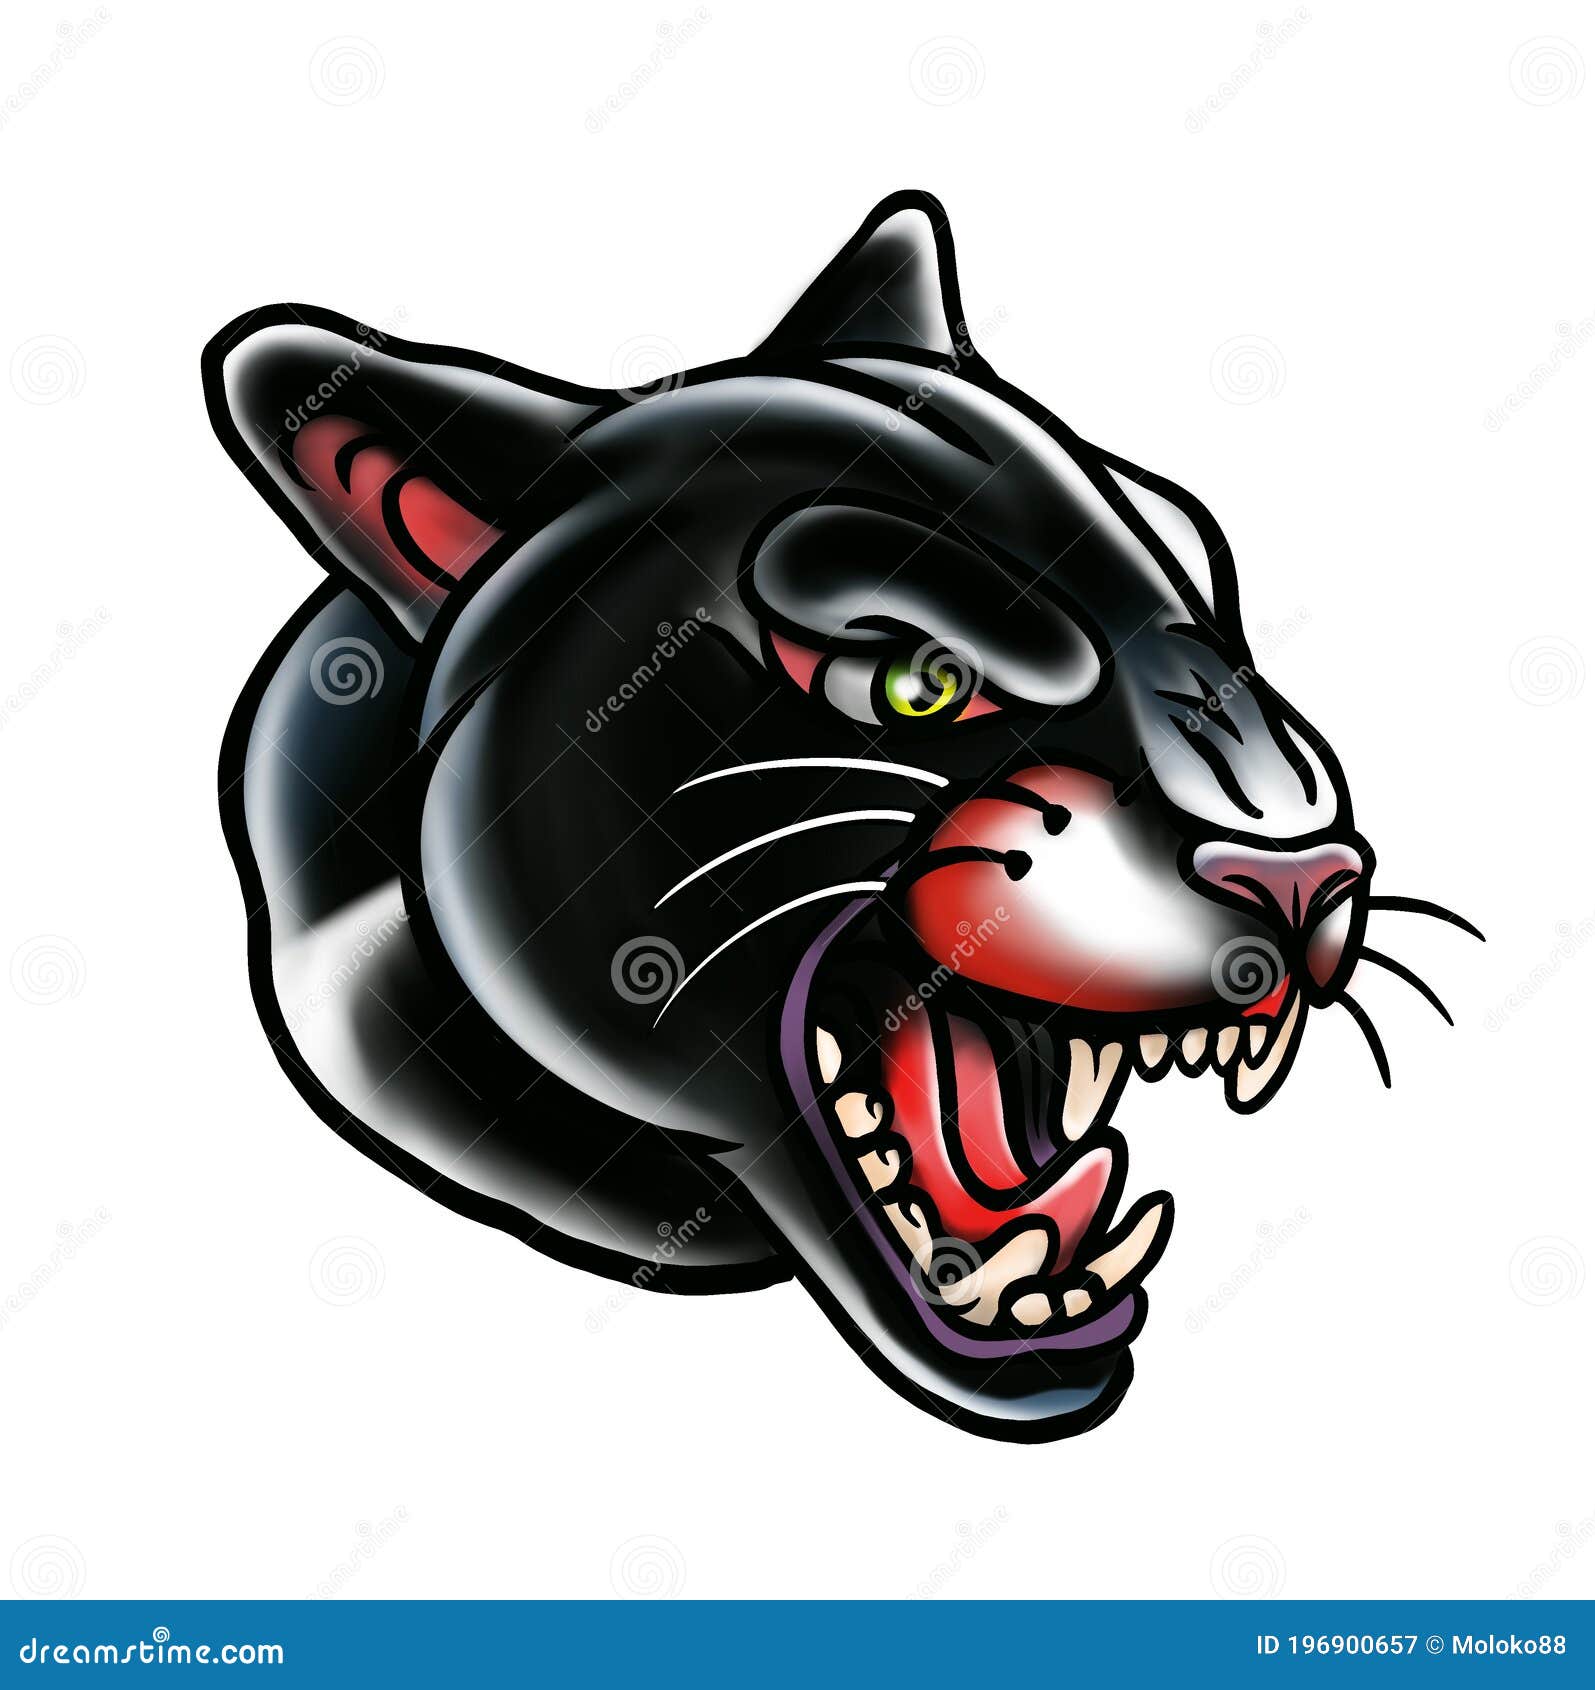 ARTURO ART - Big black pussy cat.. meow . #panther #blackpanther #tattoo # tattoos #coverup #halfsleeve #animalink #illustrativetattoo #illustration  #art #neotraditionaltattoos #neotraditional #traditionaltattoo #tattooart  #tattoolife #animalart ...